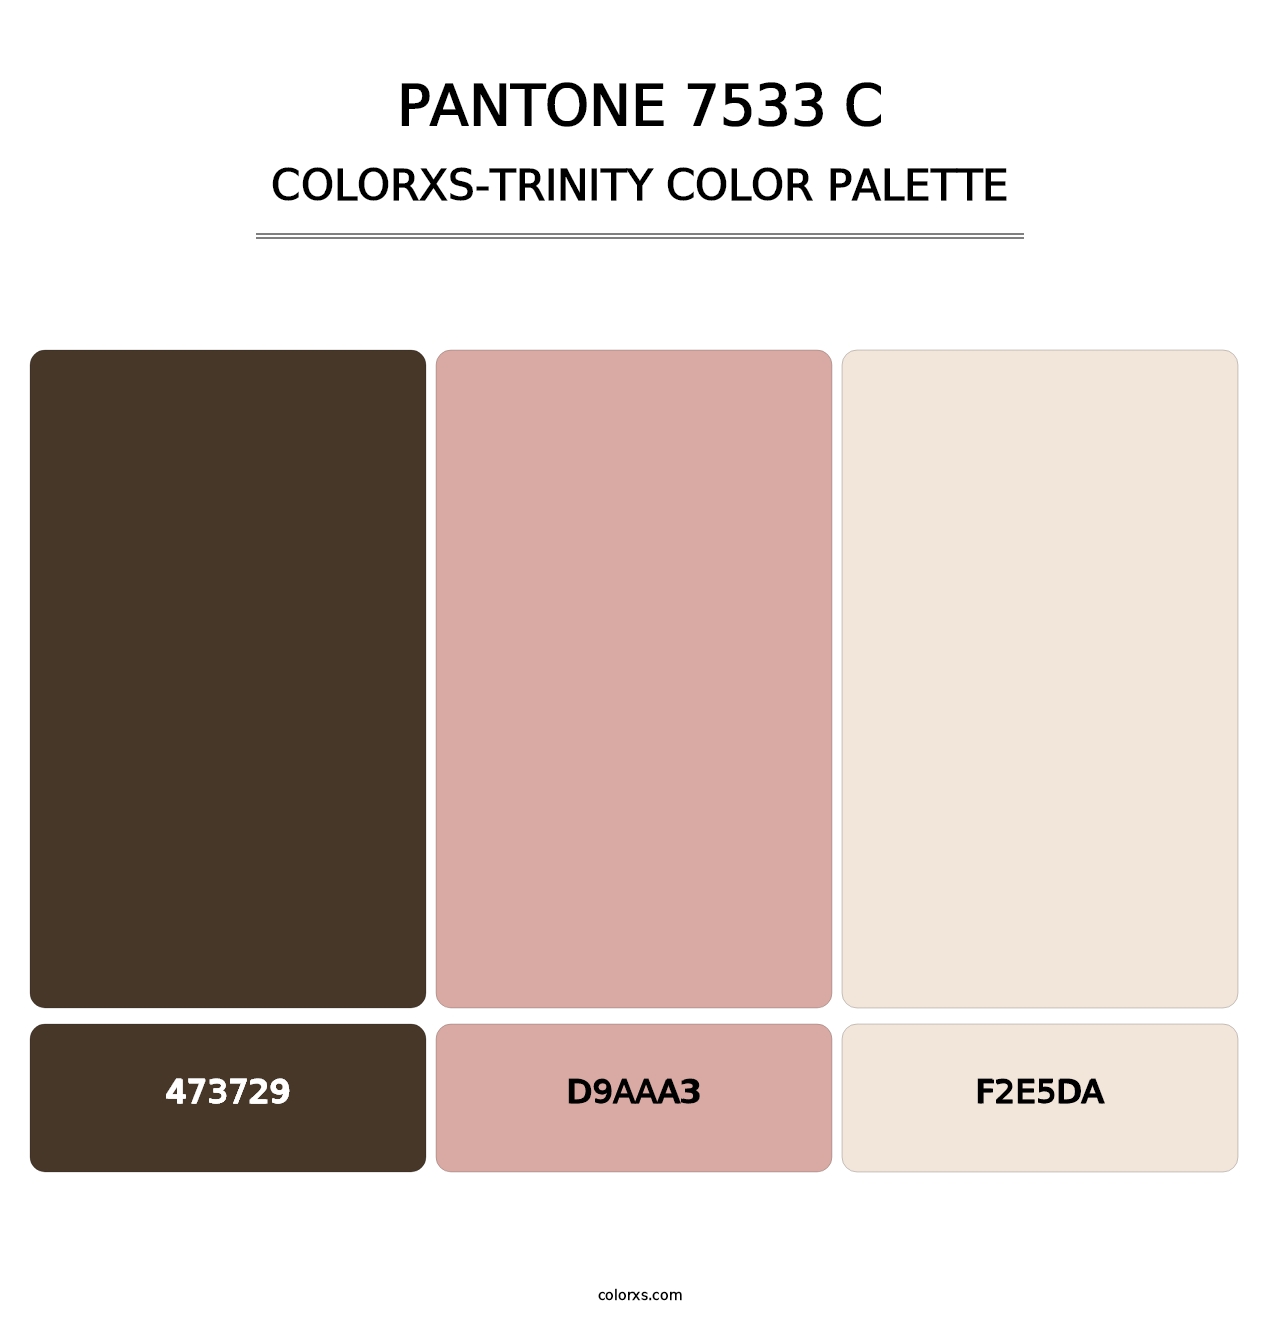 PANTONE 7533 C - Colorxs Trinity Palette